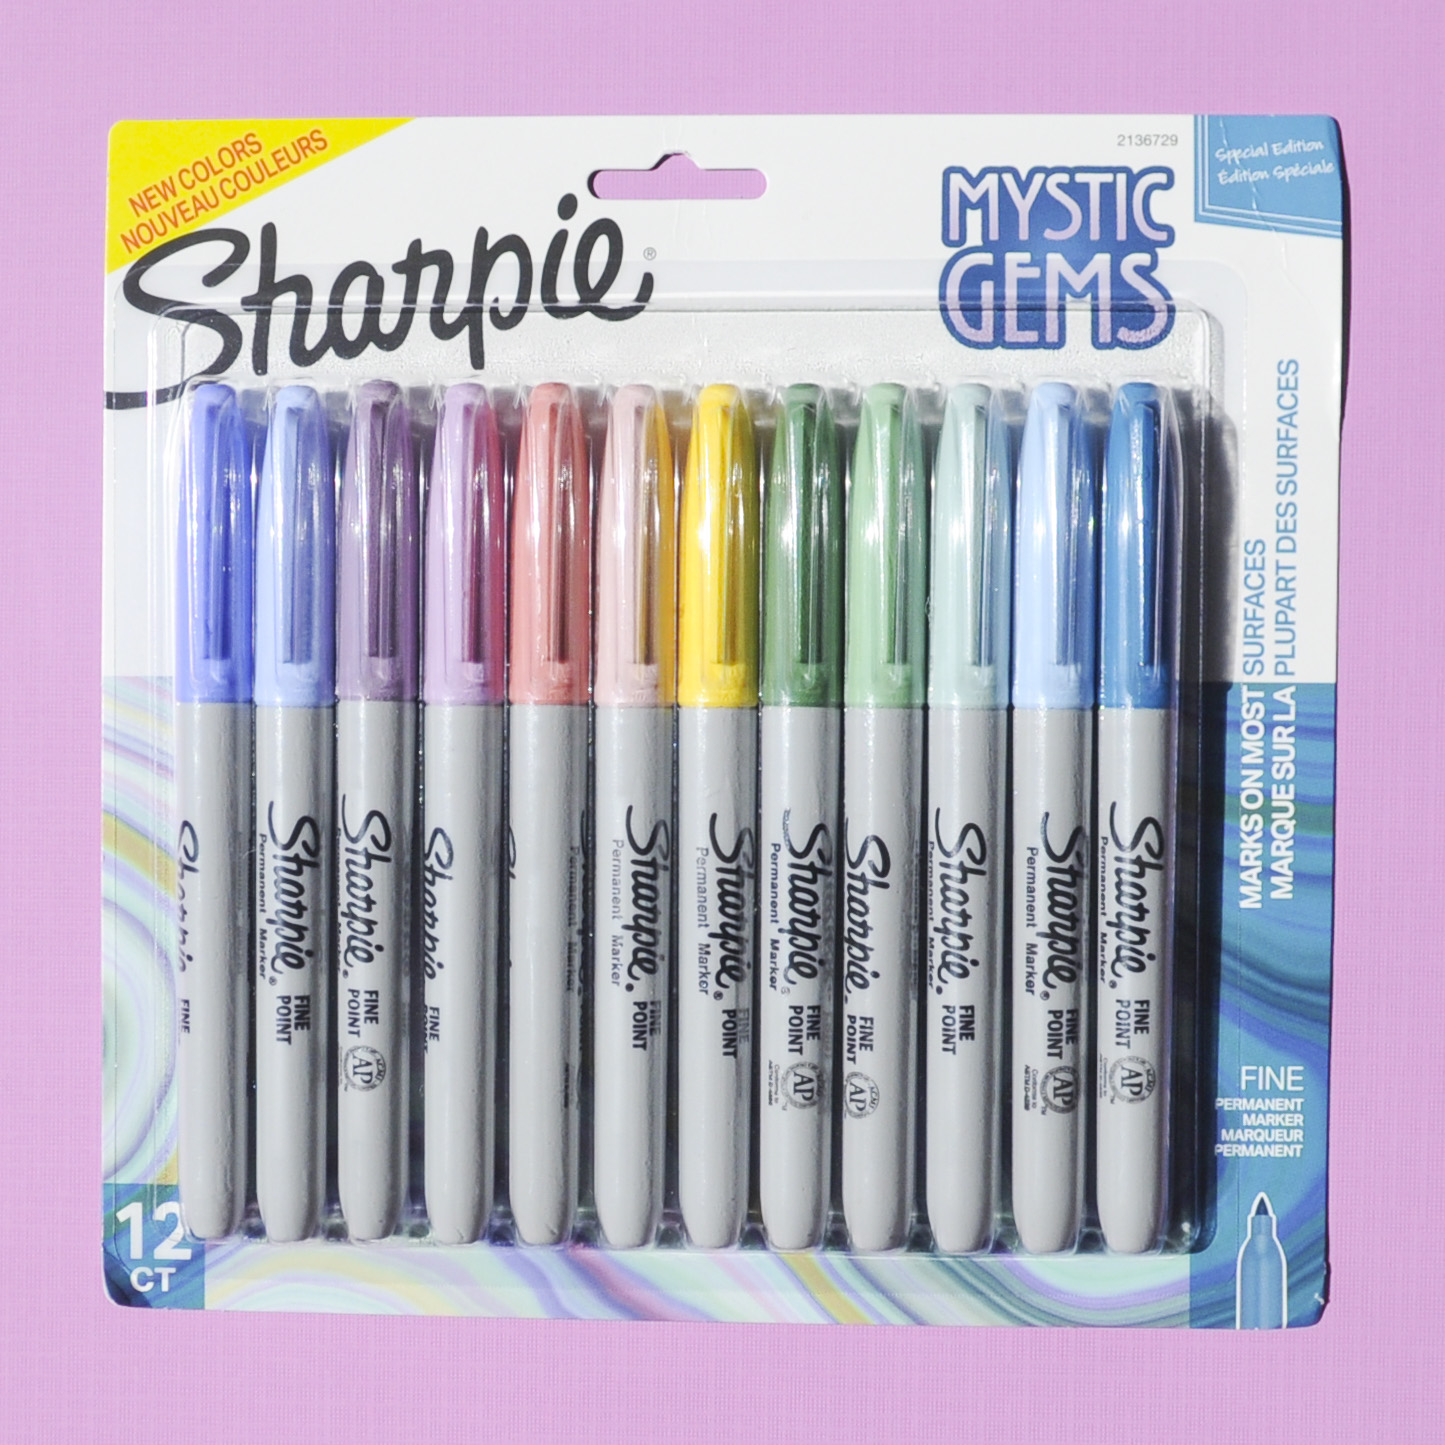 Sharpie Coloring Kit